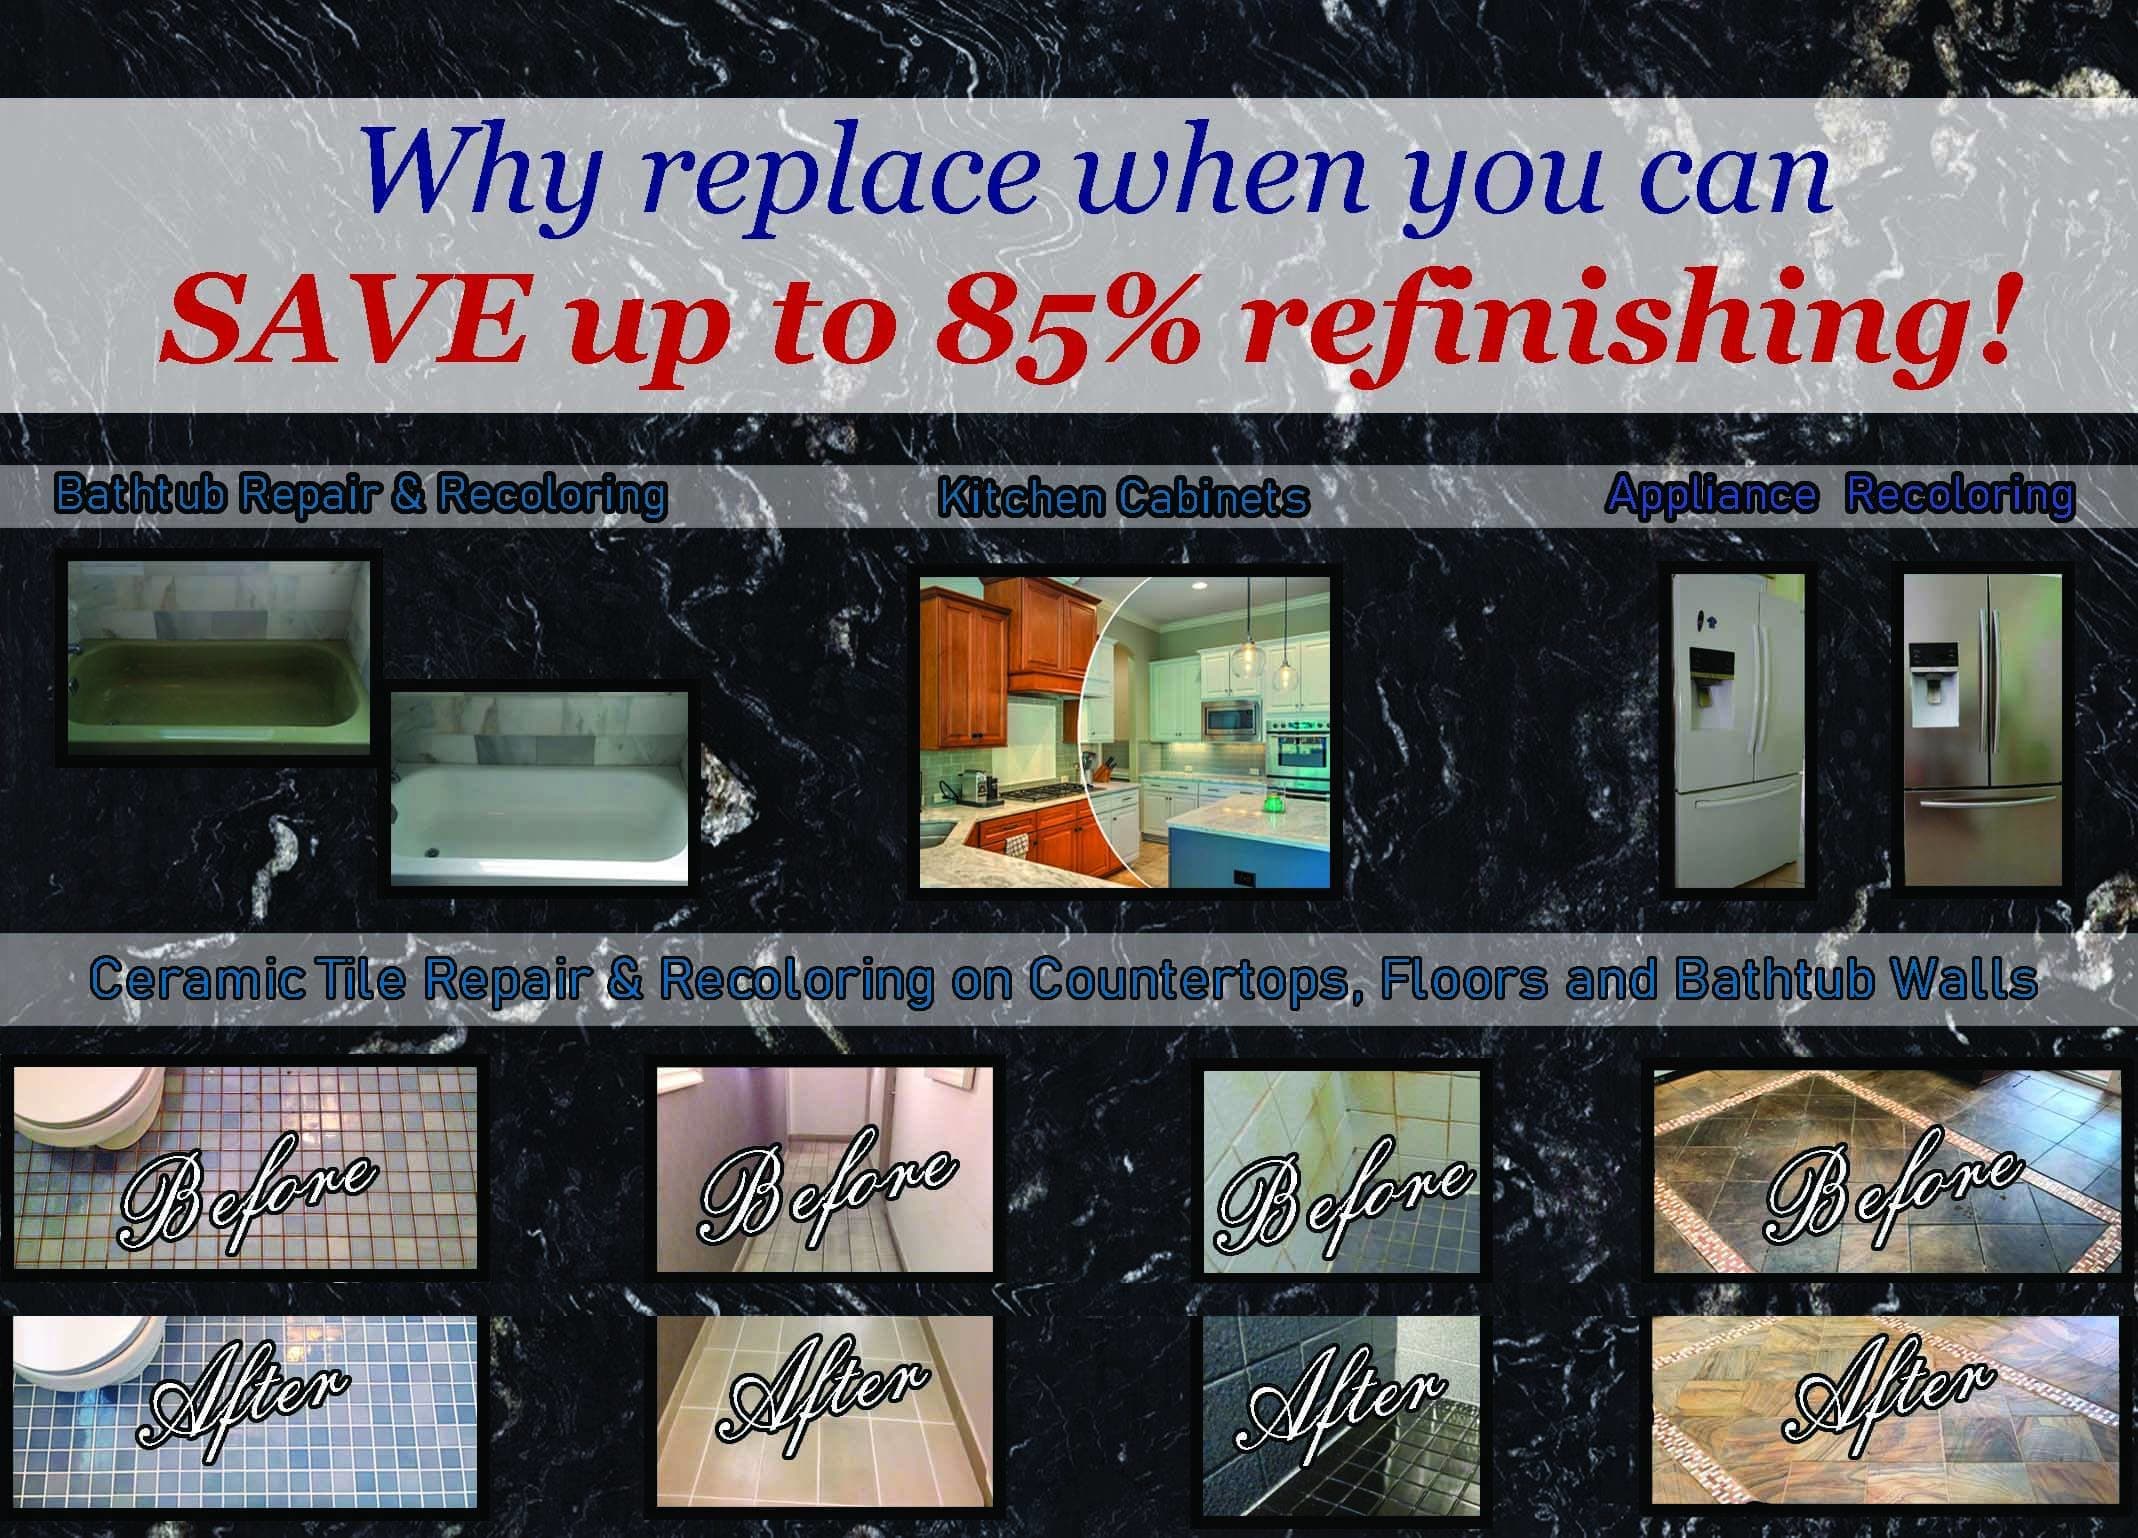 Ybas Restores / Repair and Resurface